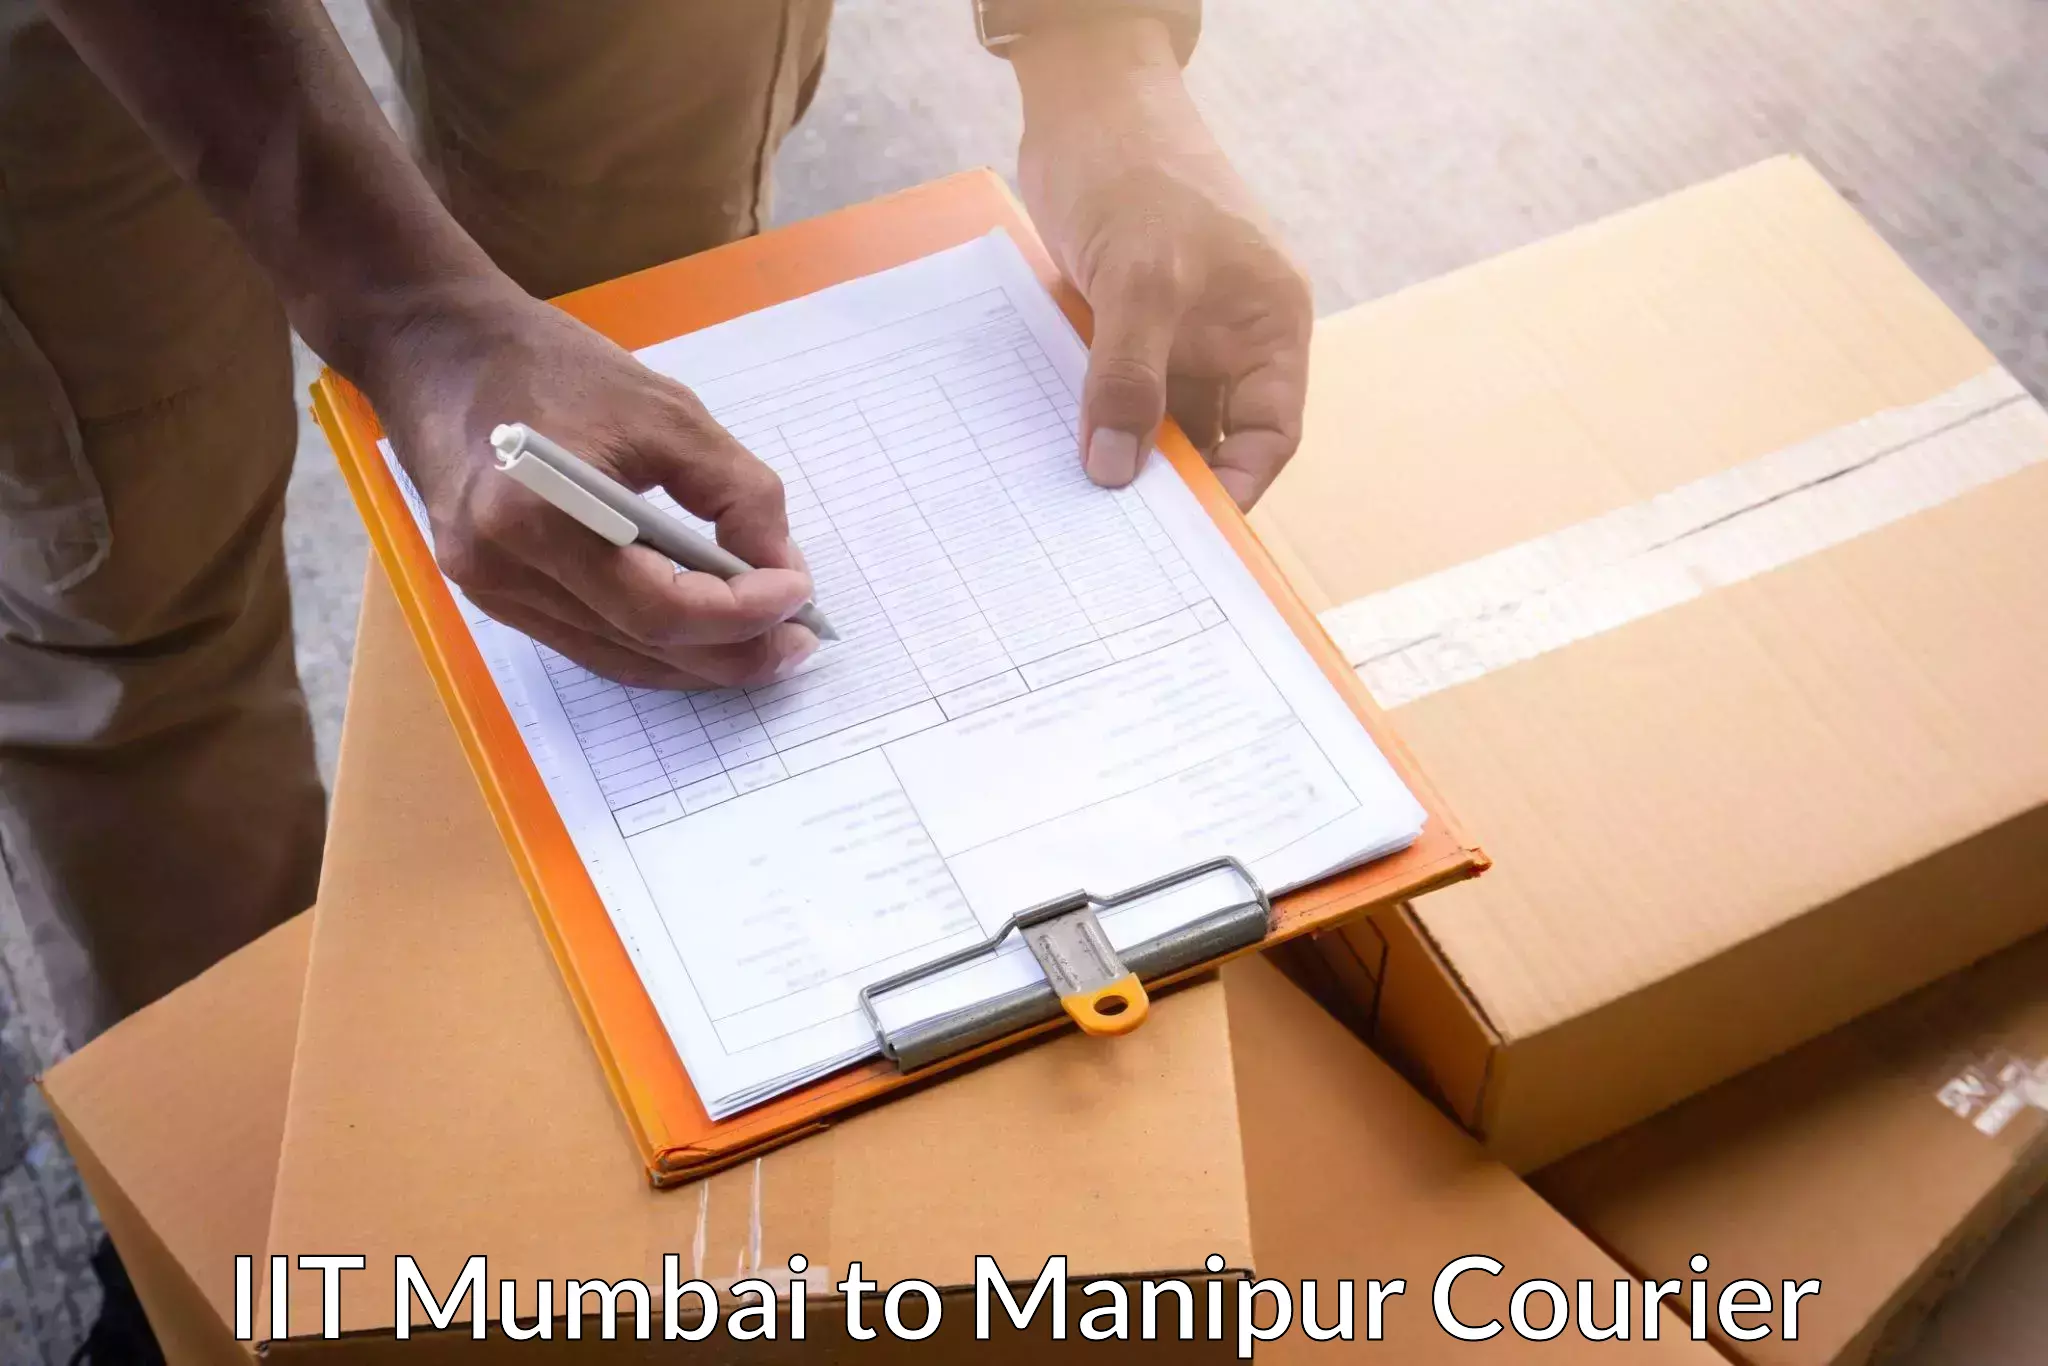 24/7 courier service IIT Mumbai to Manipur